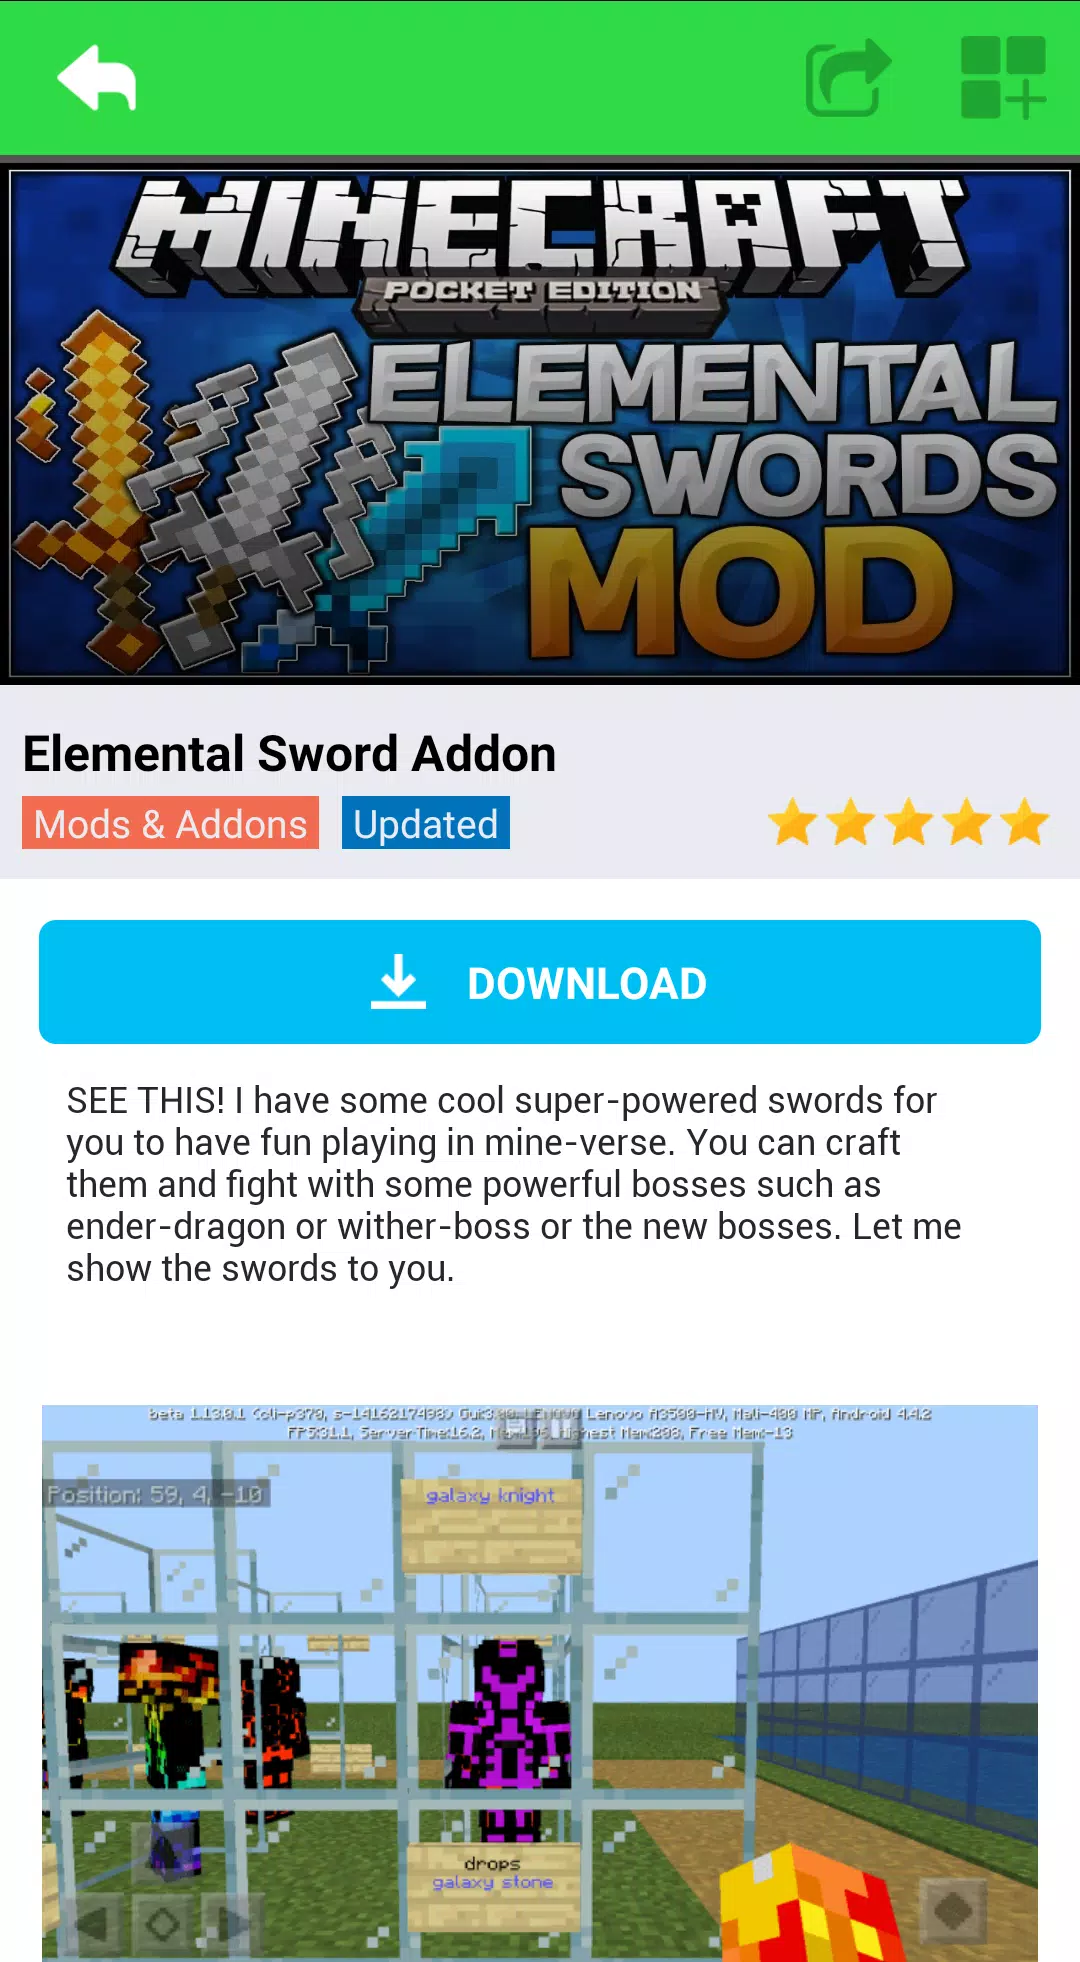 Sword MOD 1.5.9 Free Download